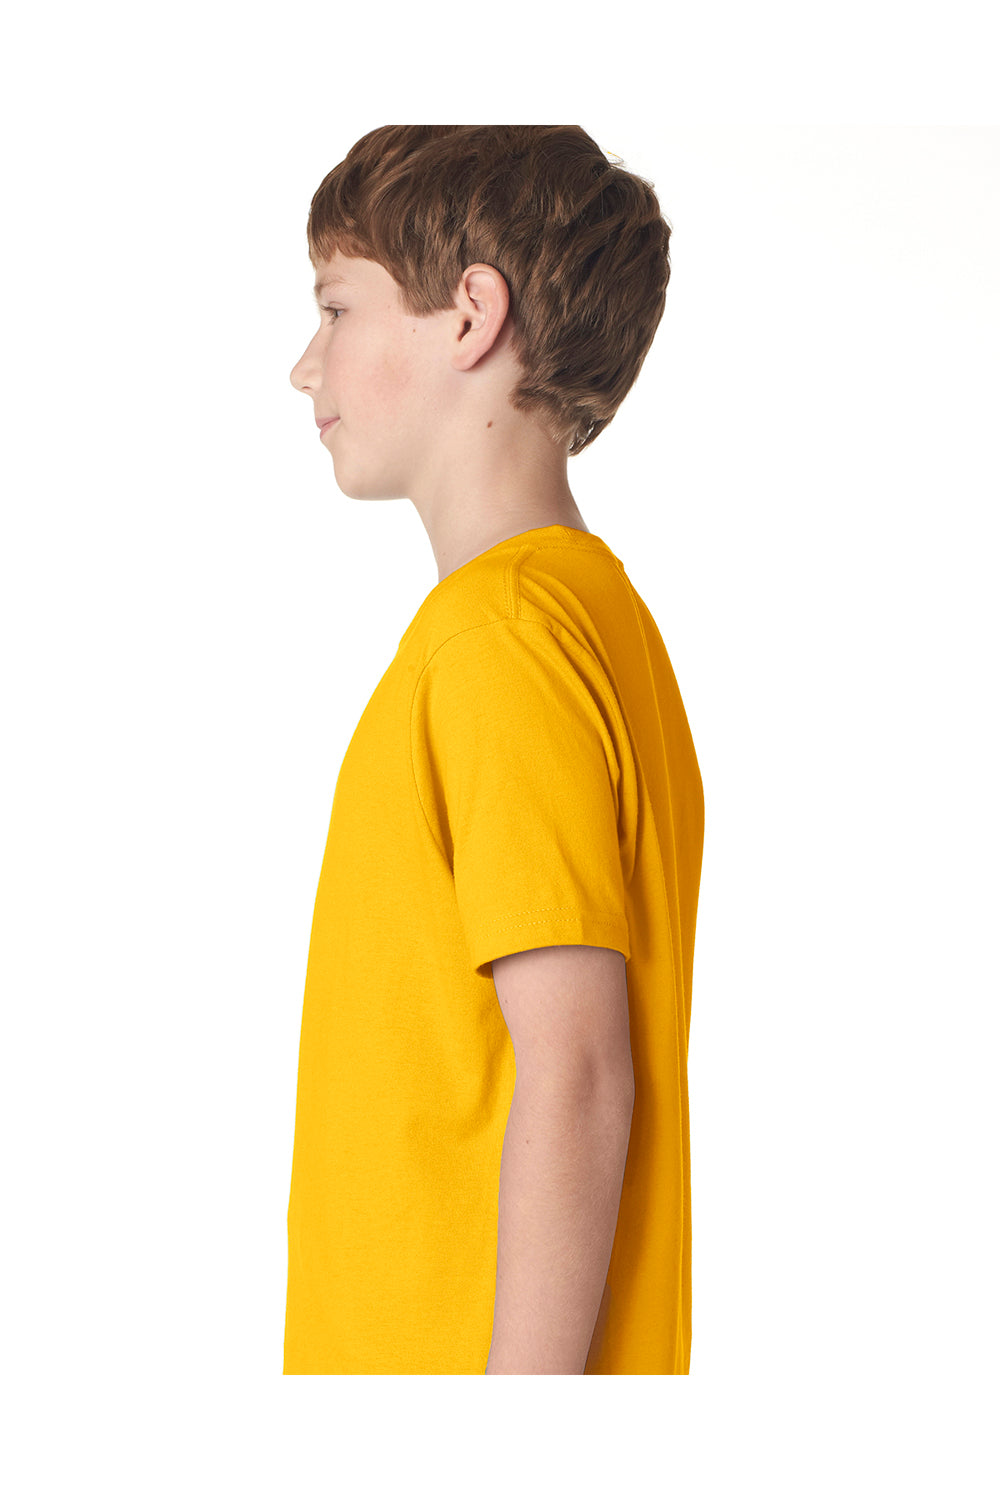 Next Level 3310 Youth Fine Jersey Short Sleeve Crewneck T-Shirt Gold Side